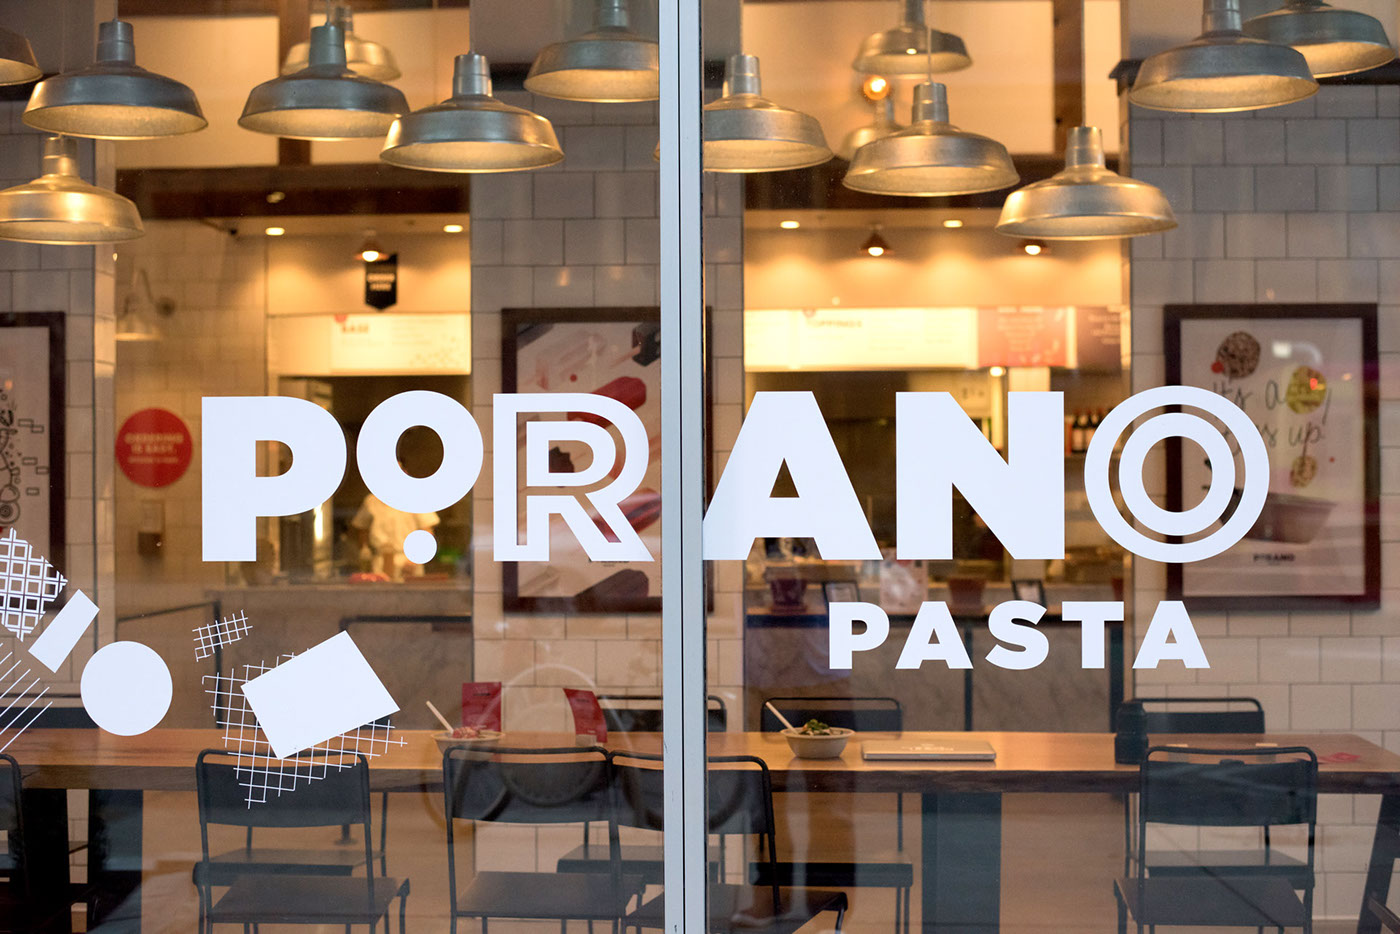 Pasta porano italian Food  restaurant noodle fast casual Web Illustrator doodles stickers Mural dining